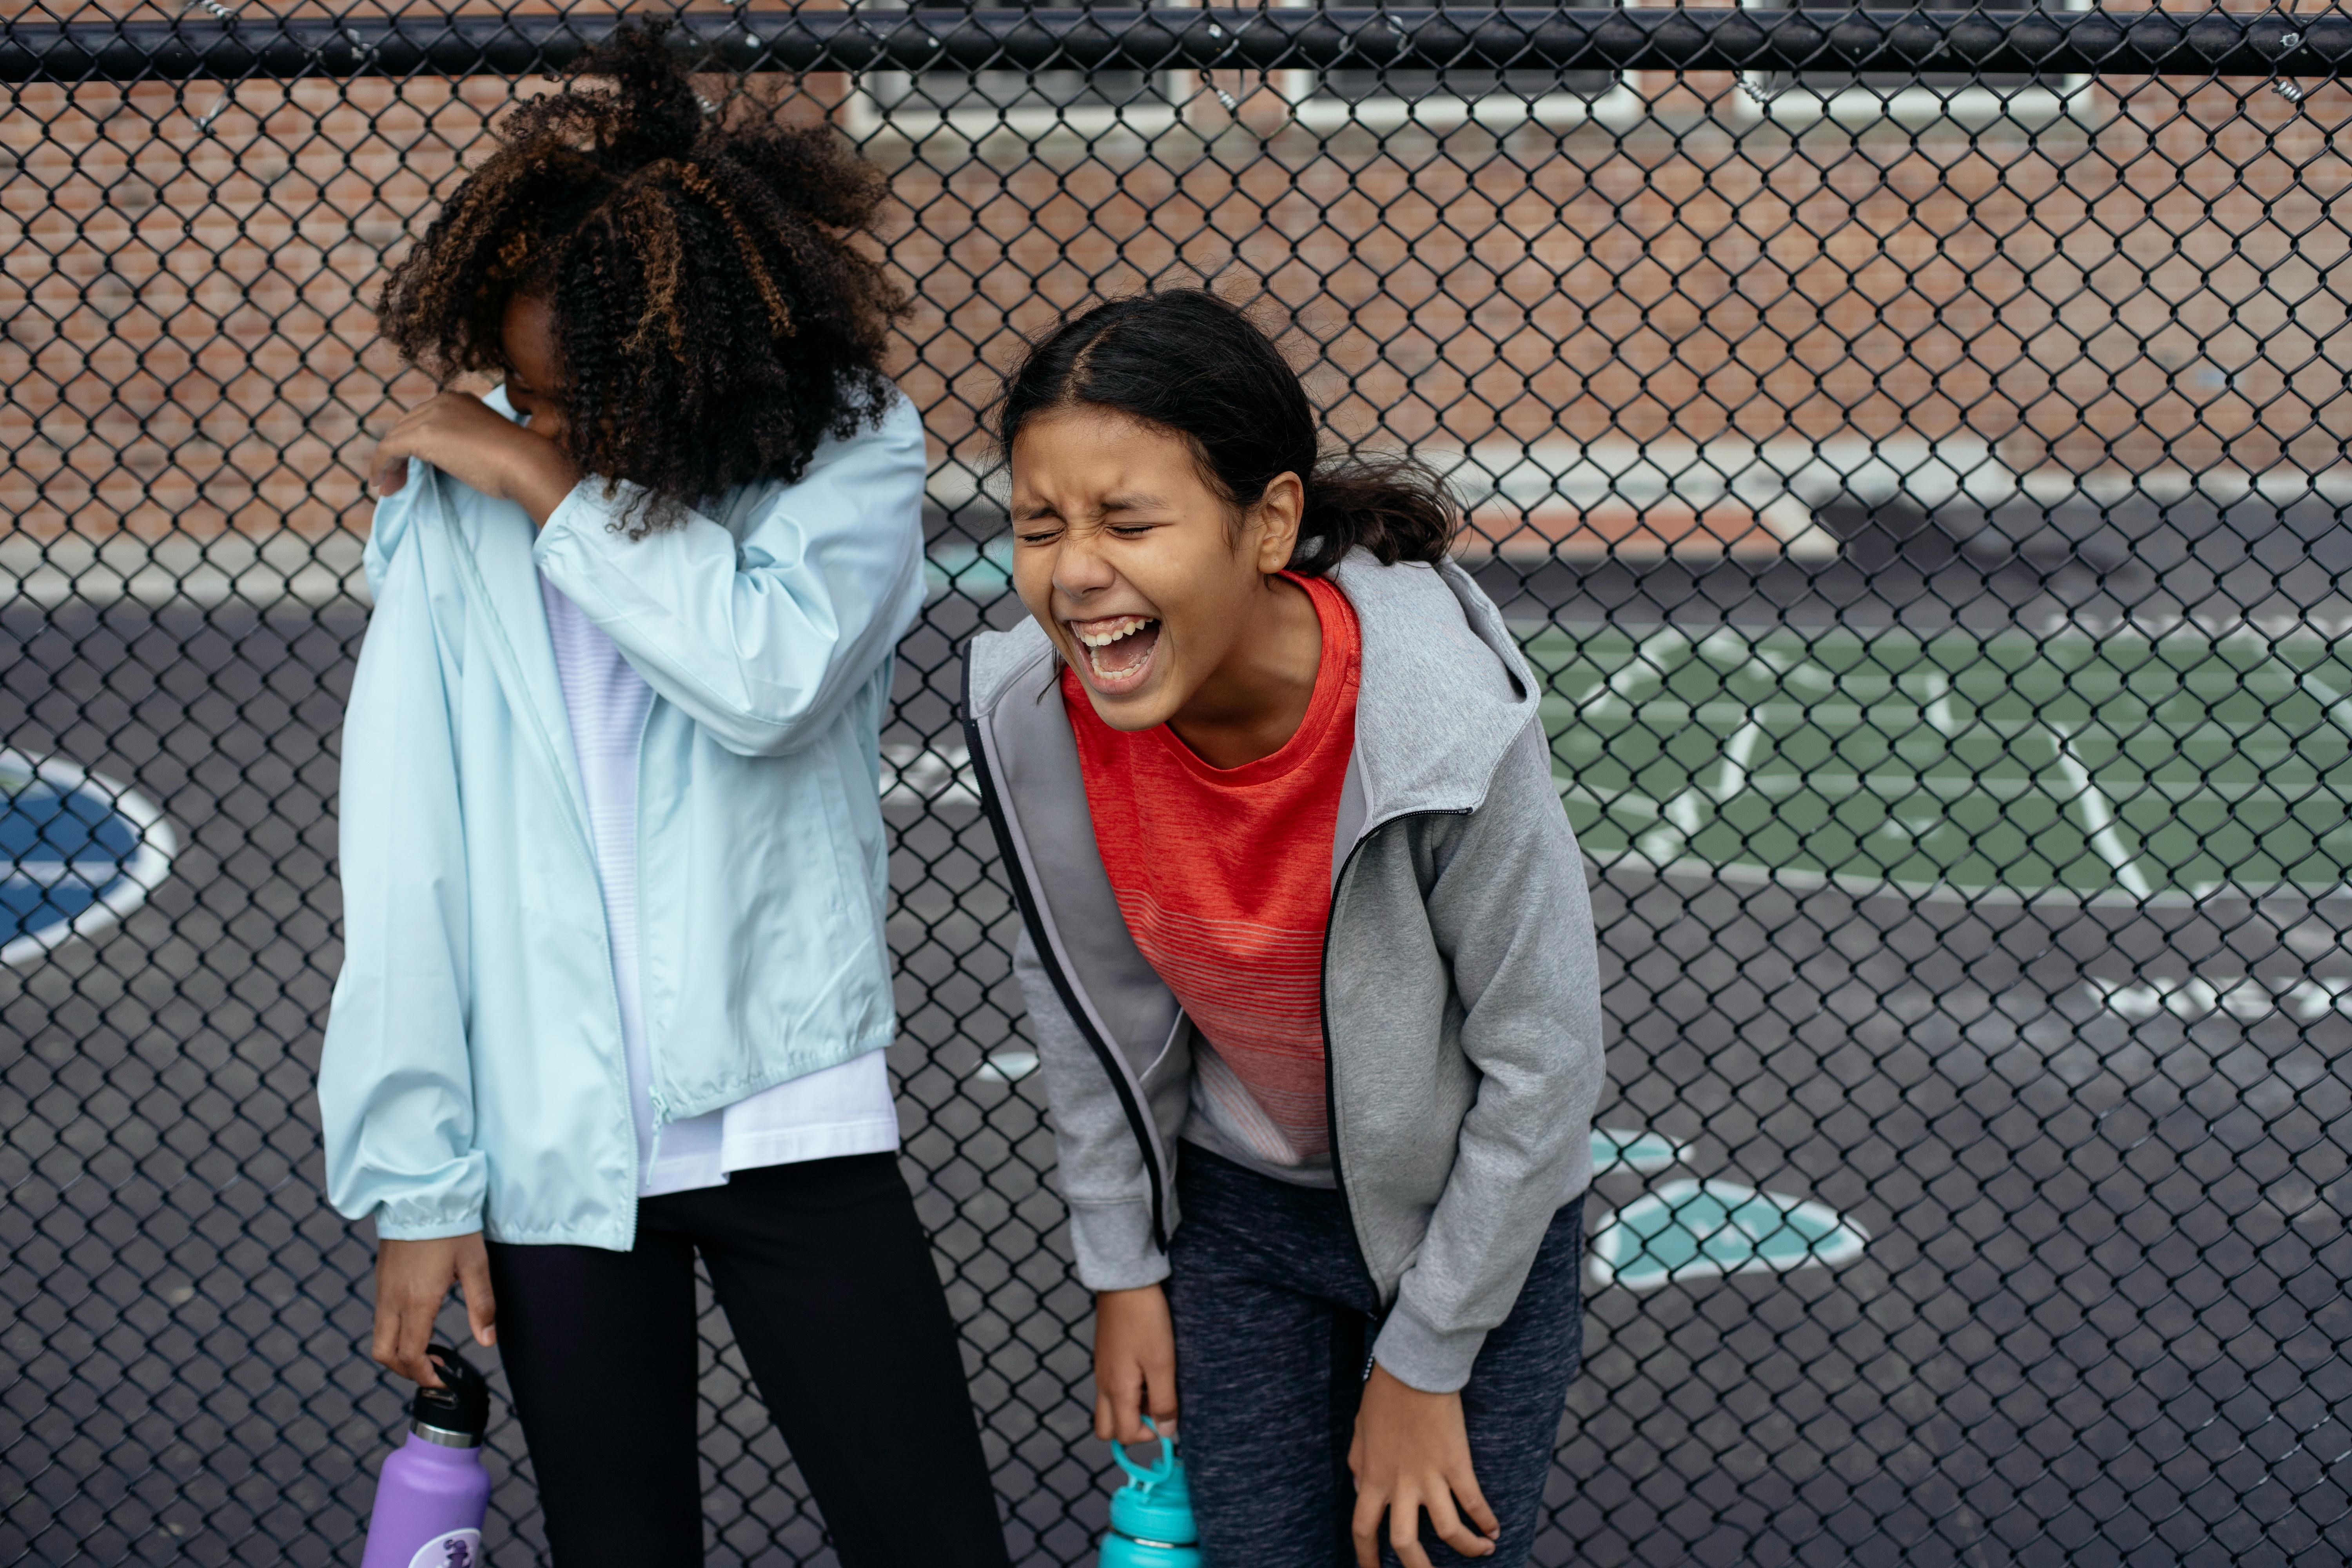 multiethnic schoolgirls laughing on sports ground